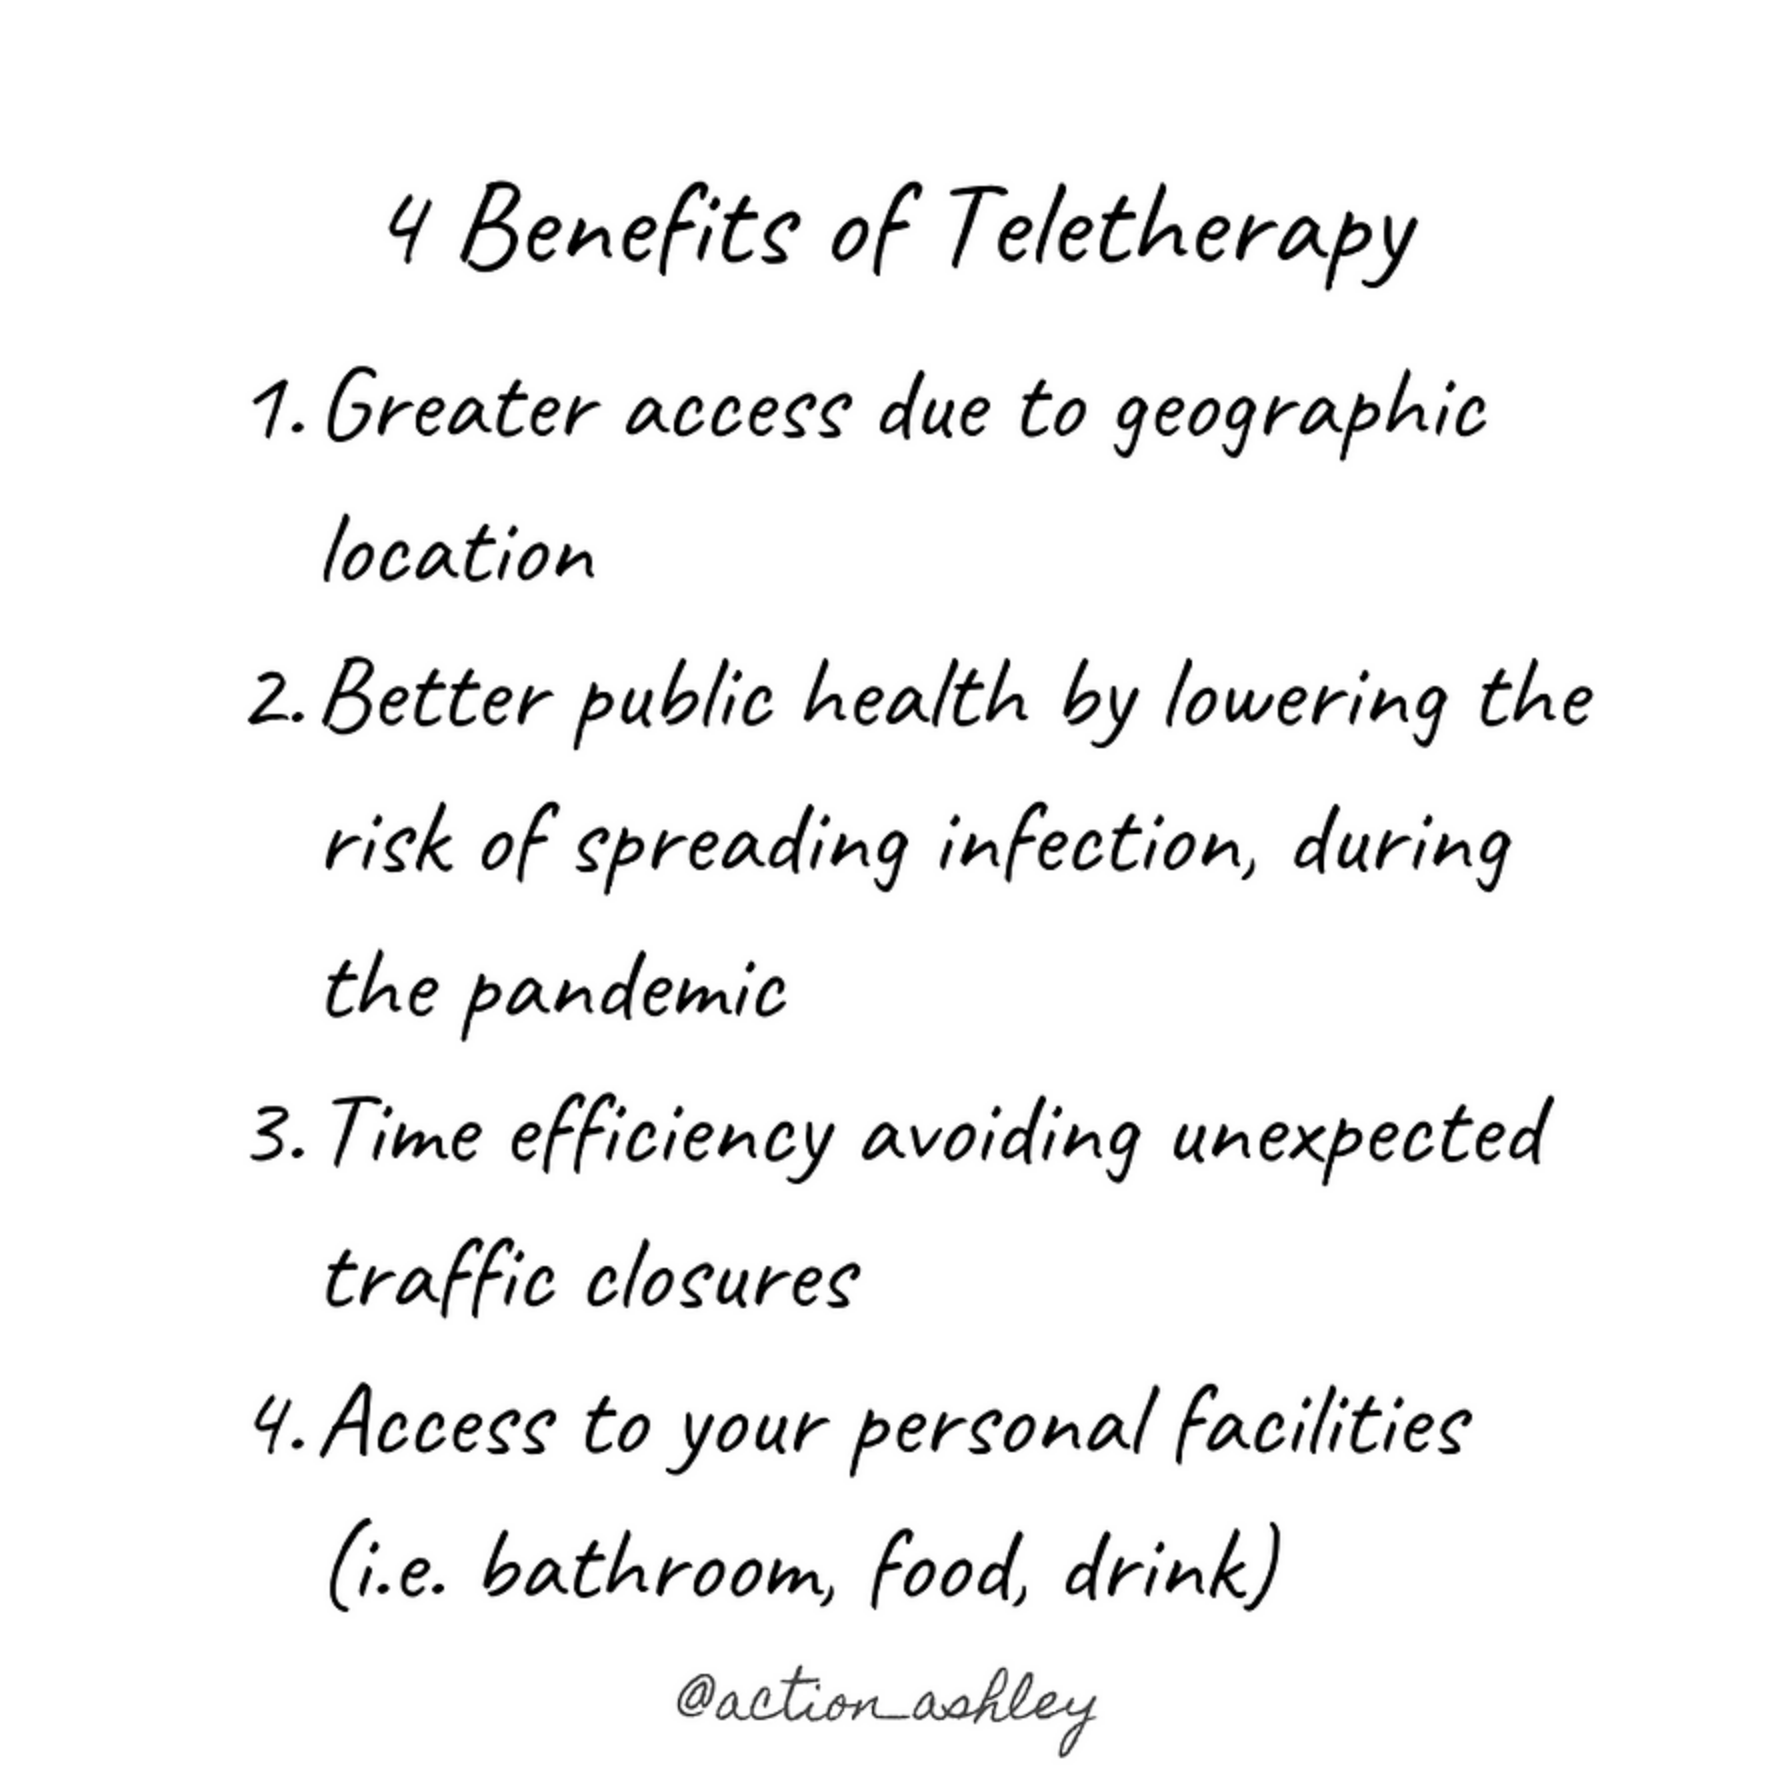 teletherapy benefits